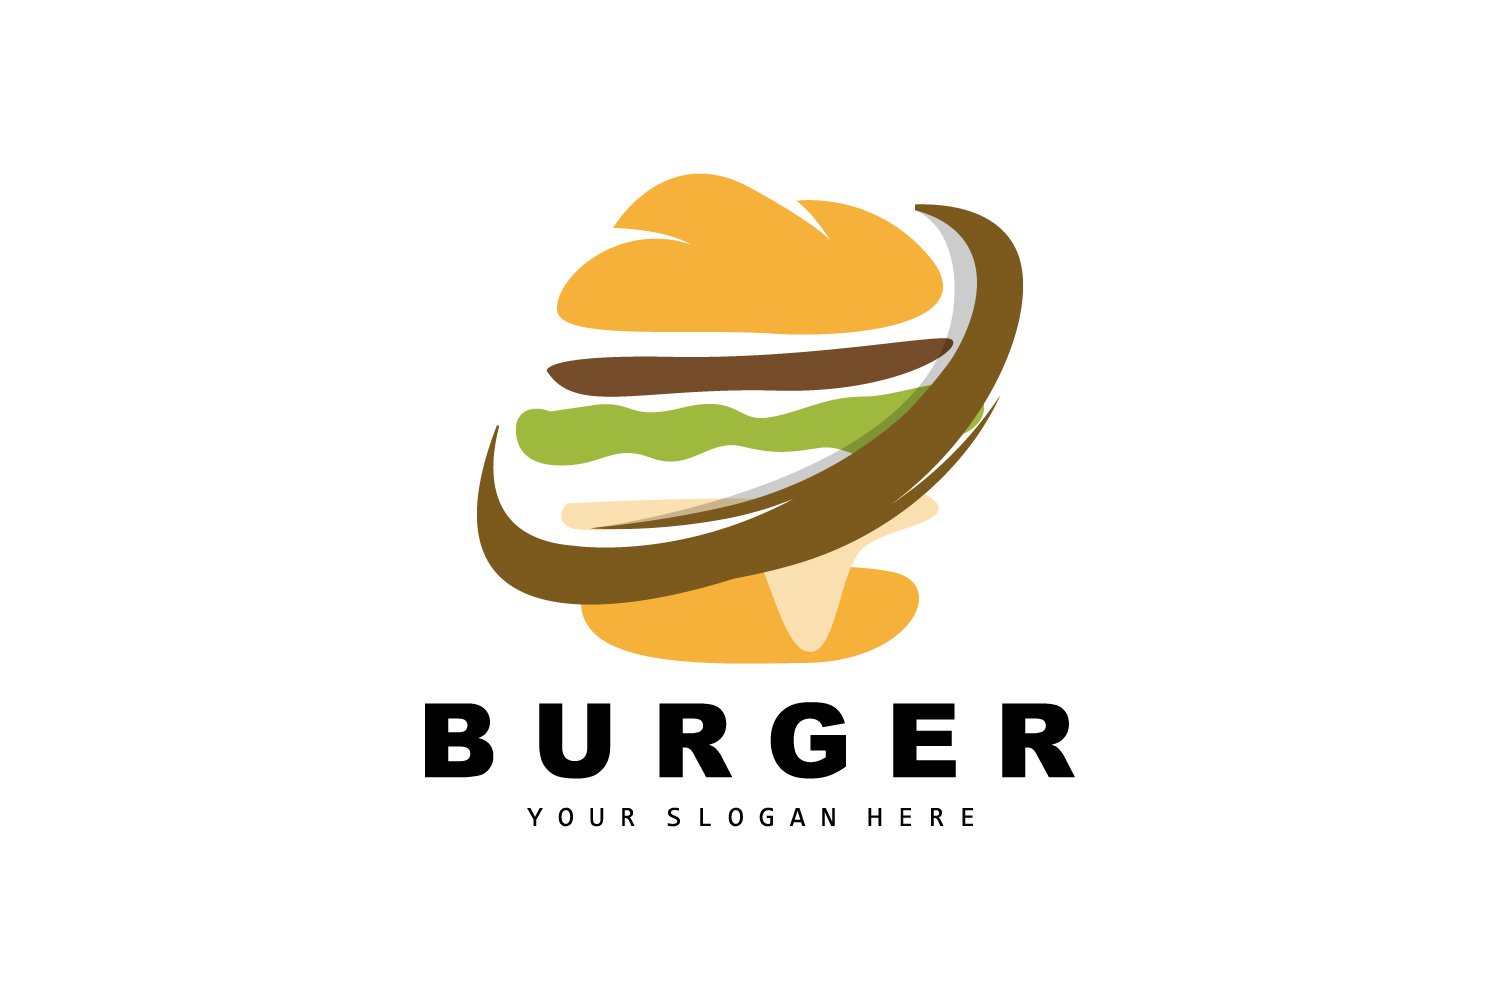 Burger Logo Fast Food DesignV12